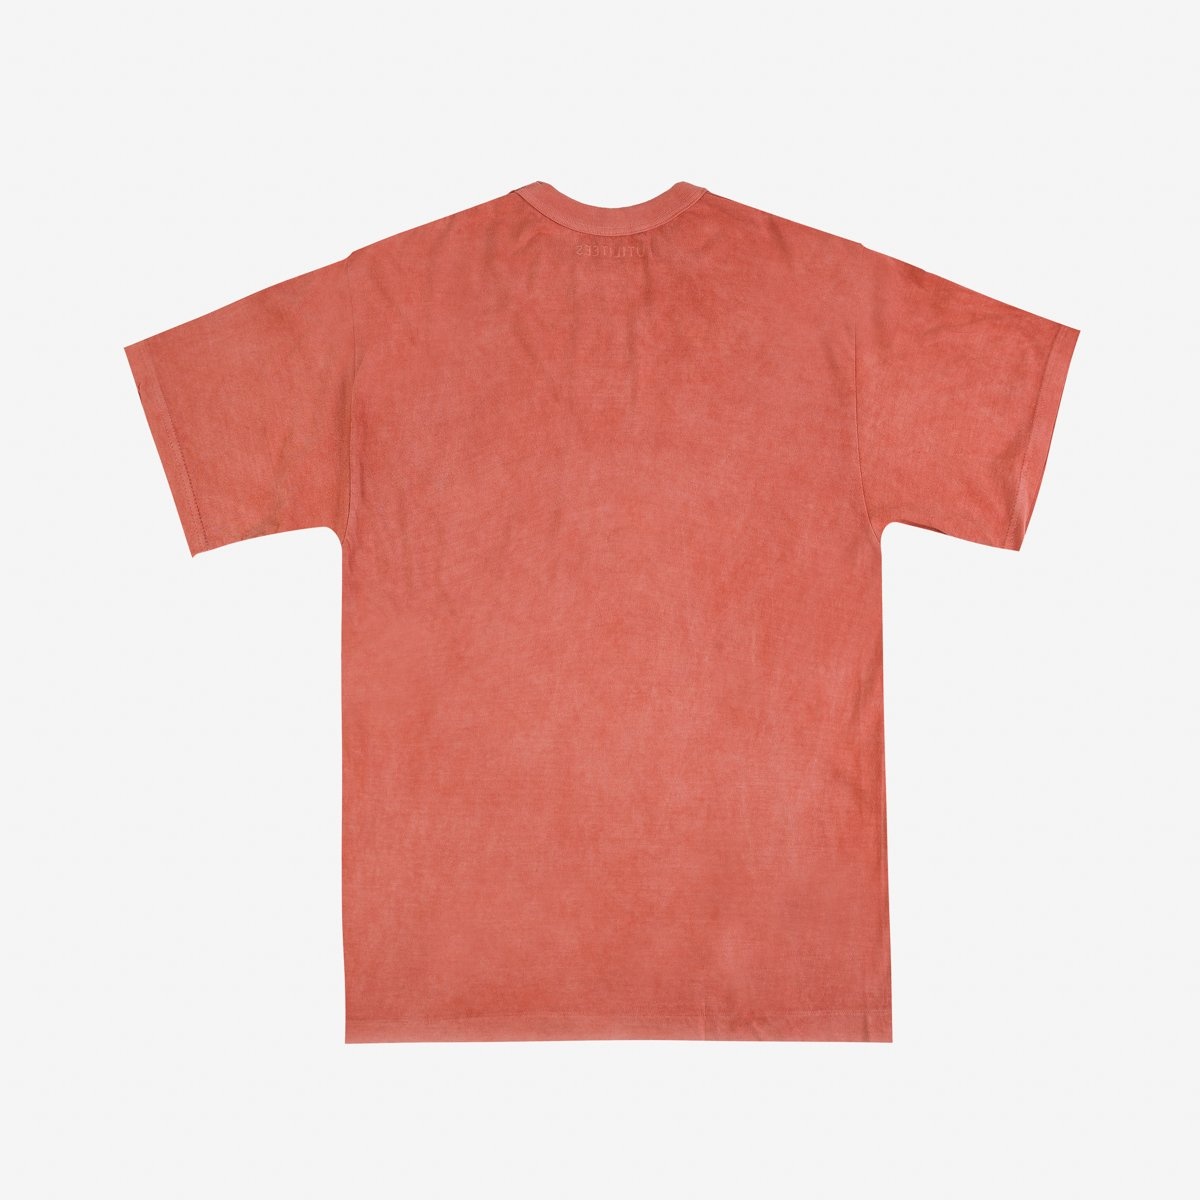 UTIL-HDYE-COR UTILITEES - 5.5oz Loopwheel Crew Neck T-Shirt - Hand Dyed Coral Pink - 4